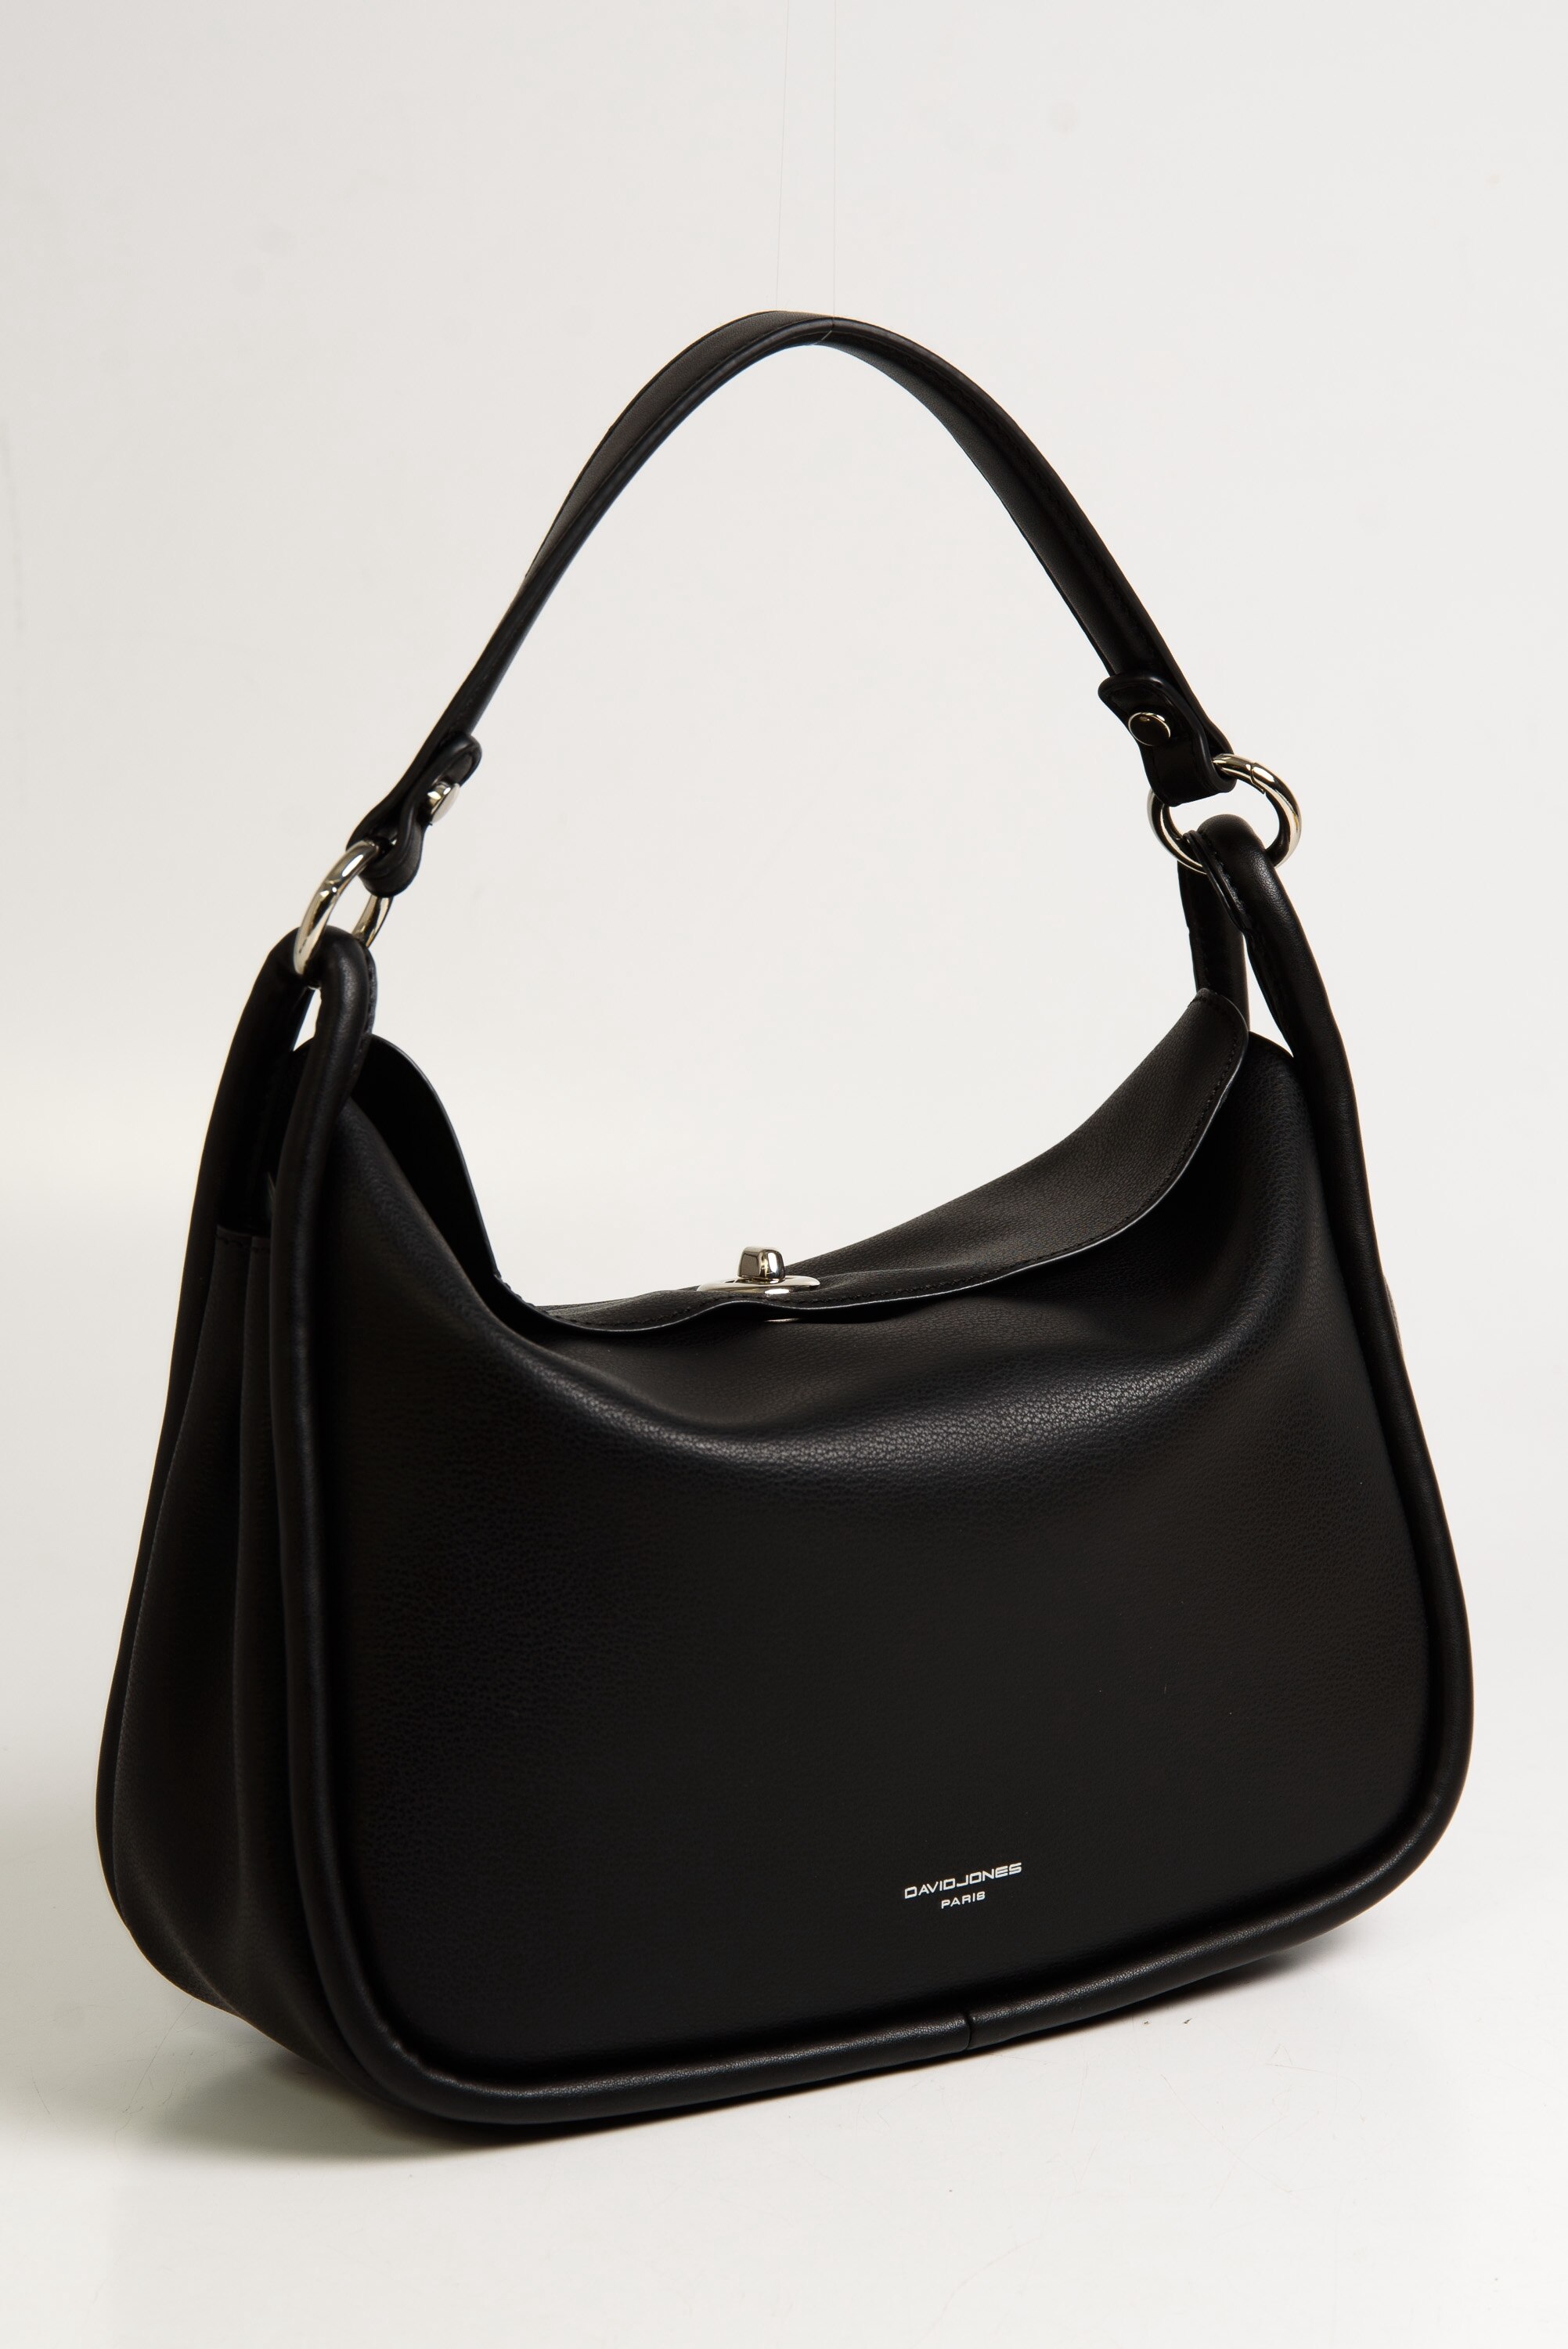 WHOLESALEDavid Jones Paris Large Satchel HANDBAGS > Designer Handbags ...